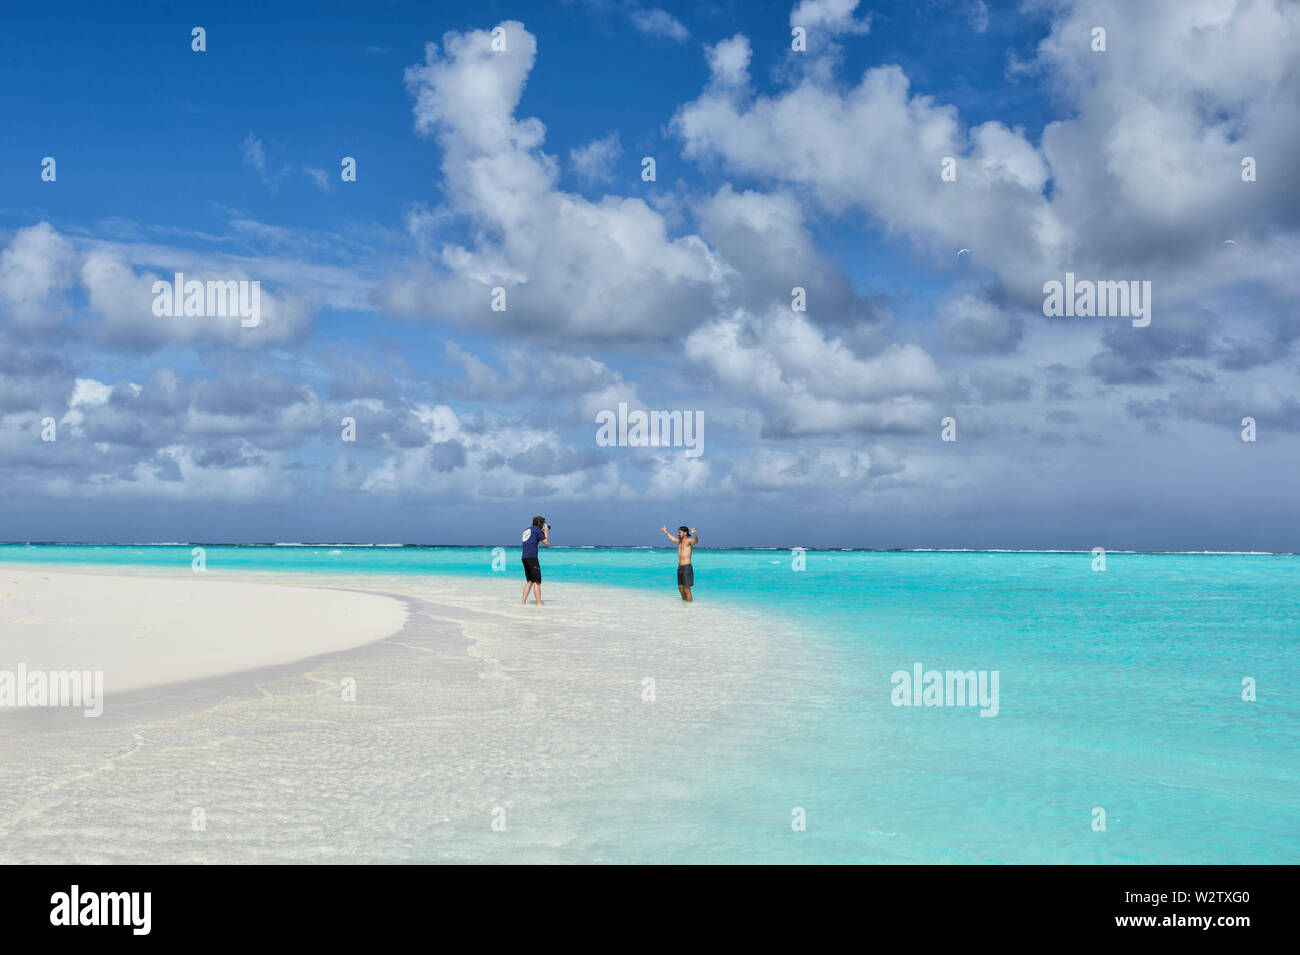 Tourist in posa per una fotografia su una spiaggia di sabbia bianca a laguna turchese di Aitutaki, Isole Cook, Polinesia Foto Stock